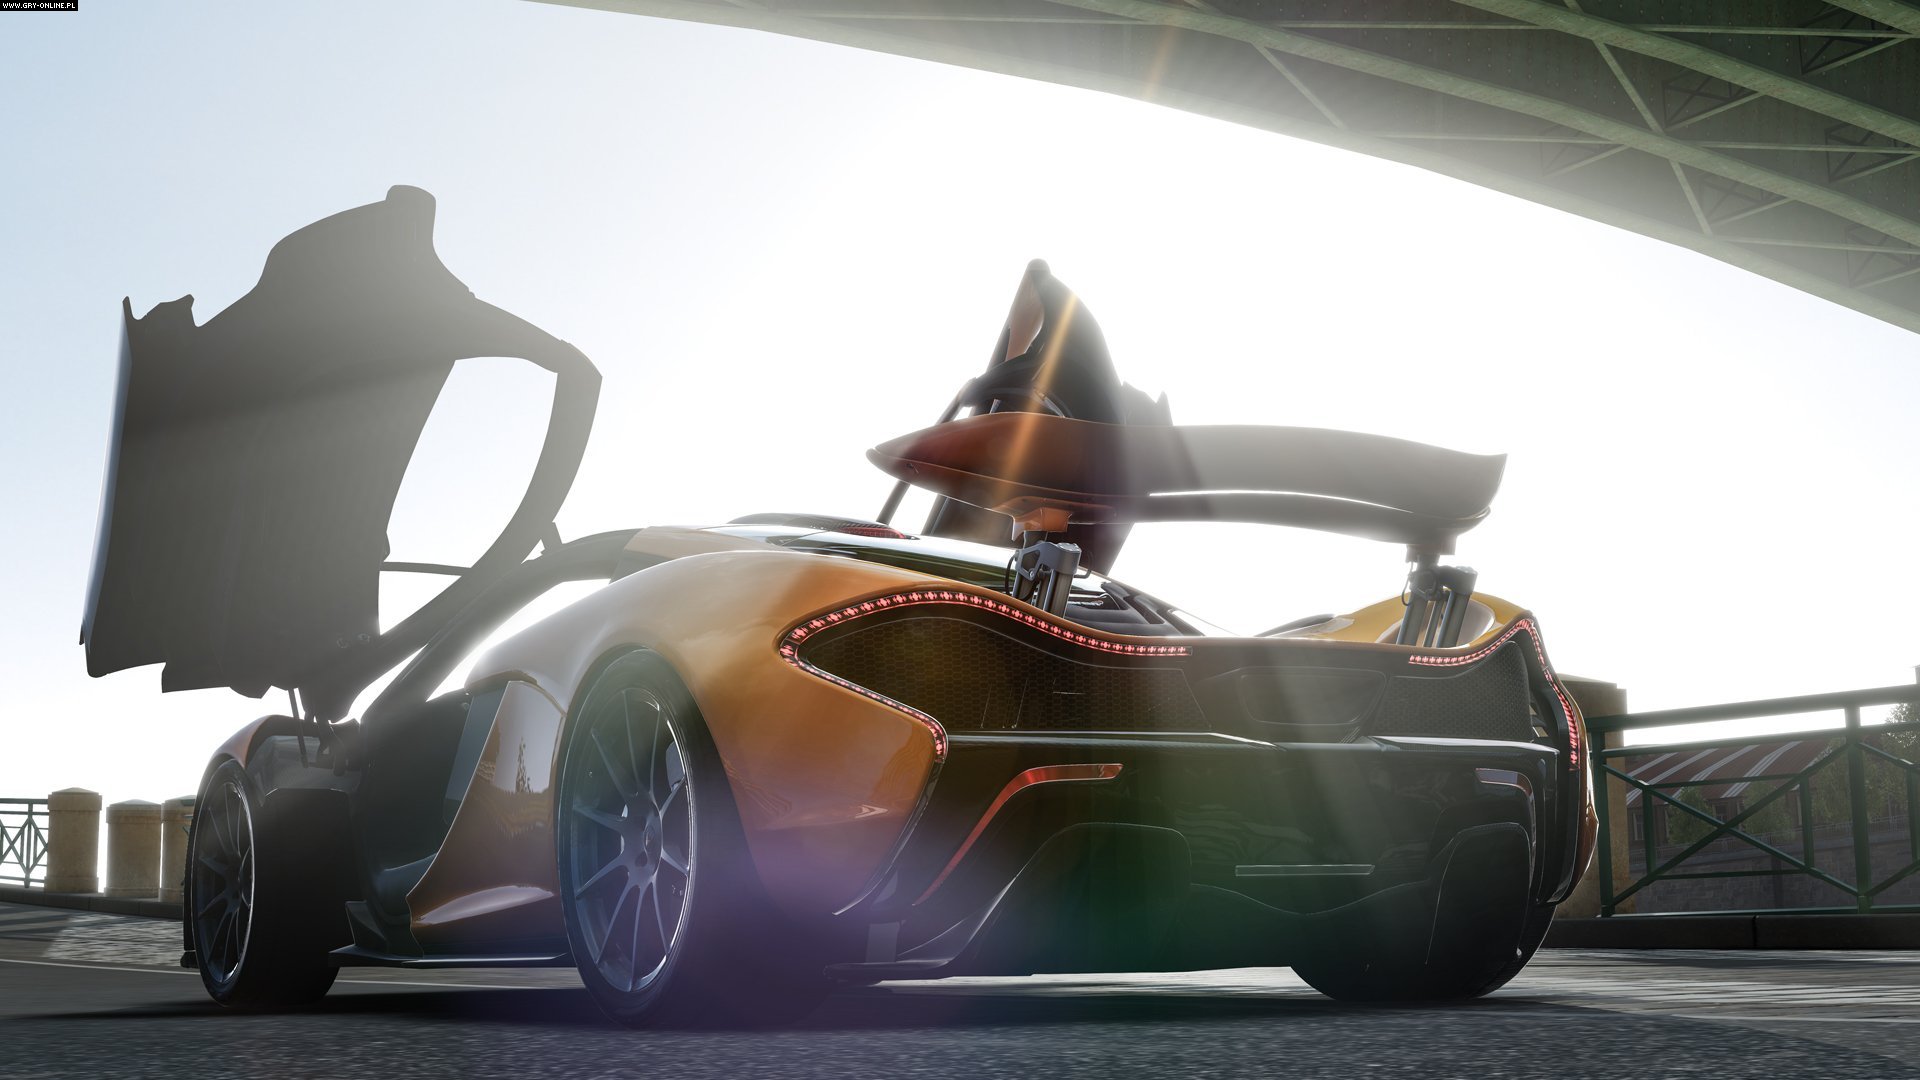 Baixar papel de parede para celular de Forza Motorsport 5, Videogame gratuito.